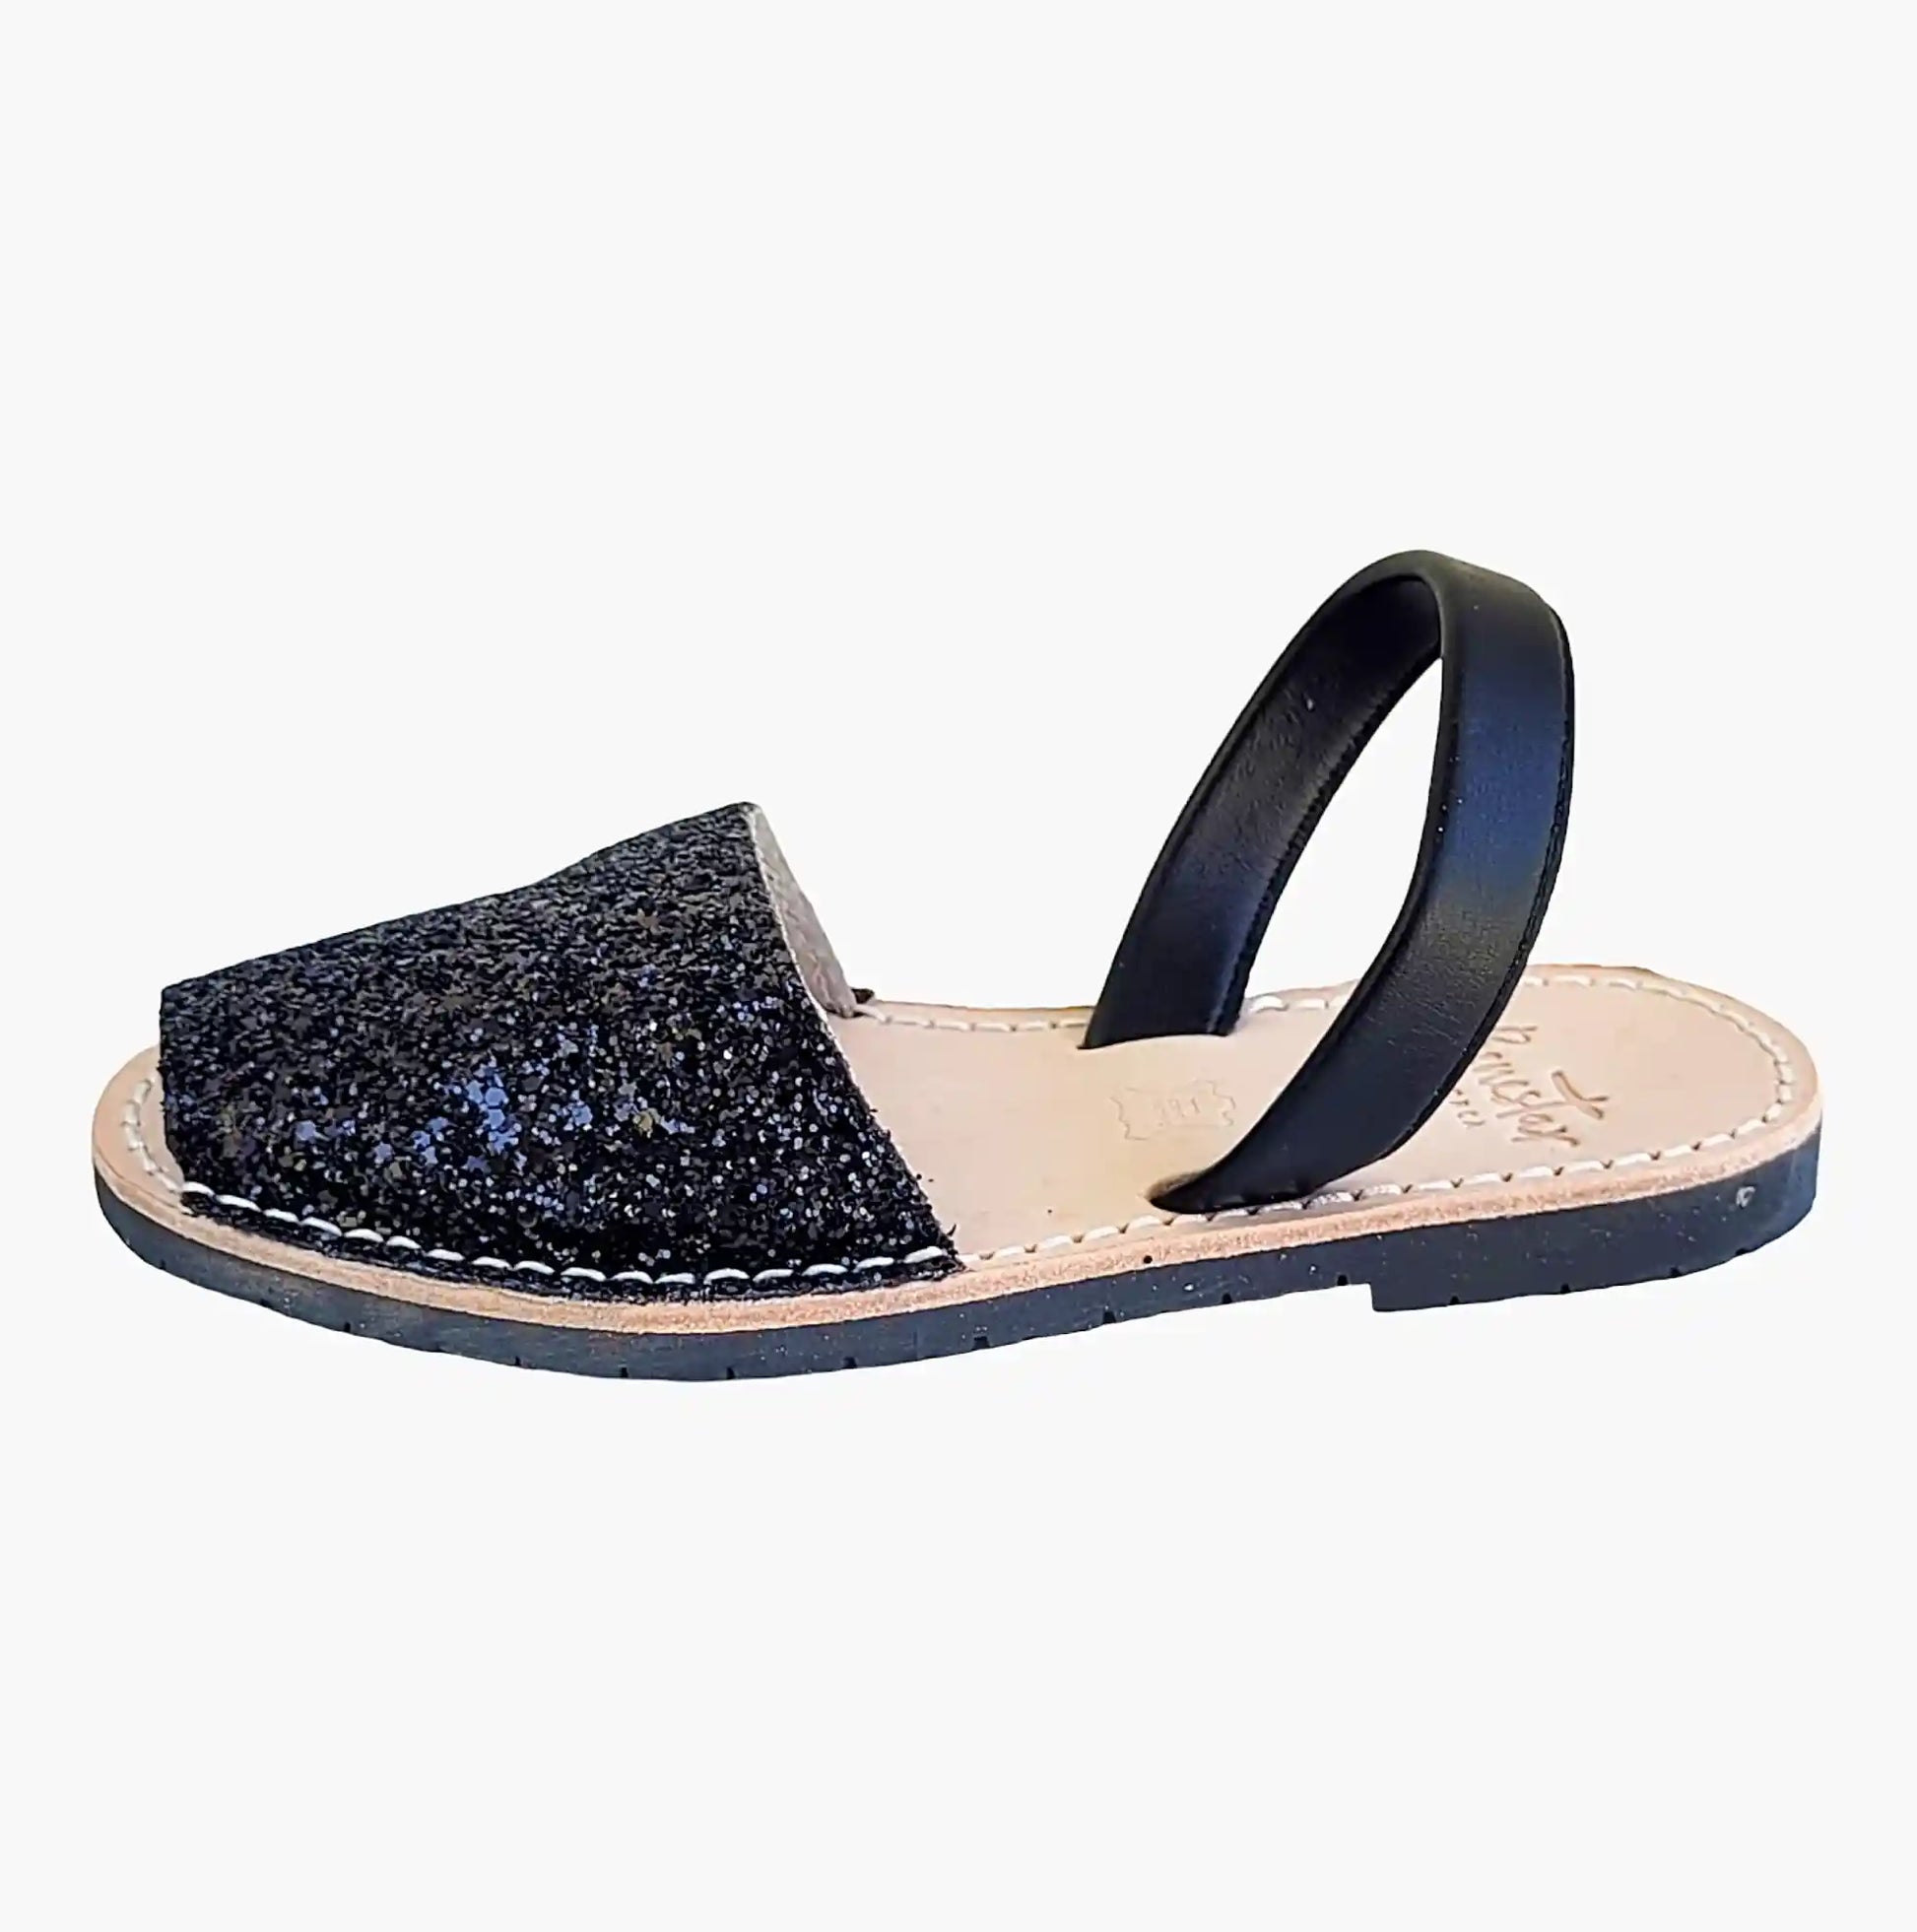 Avarcas-Black-Glitter-Sandals-no-trim-side-view